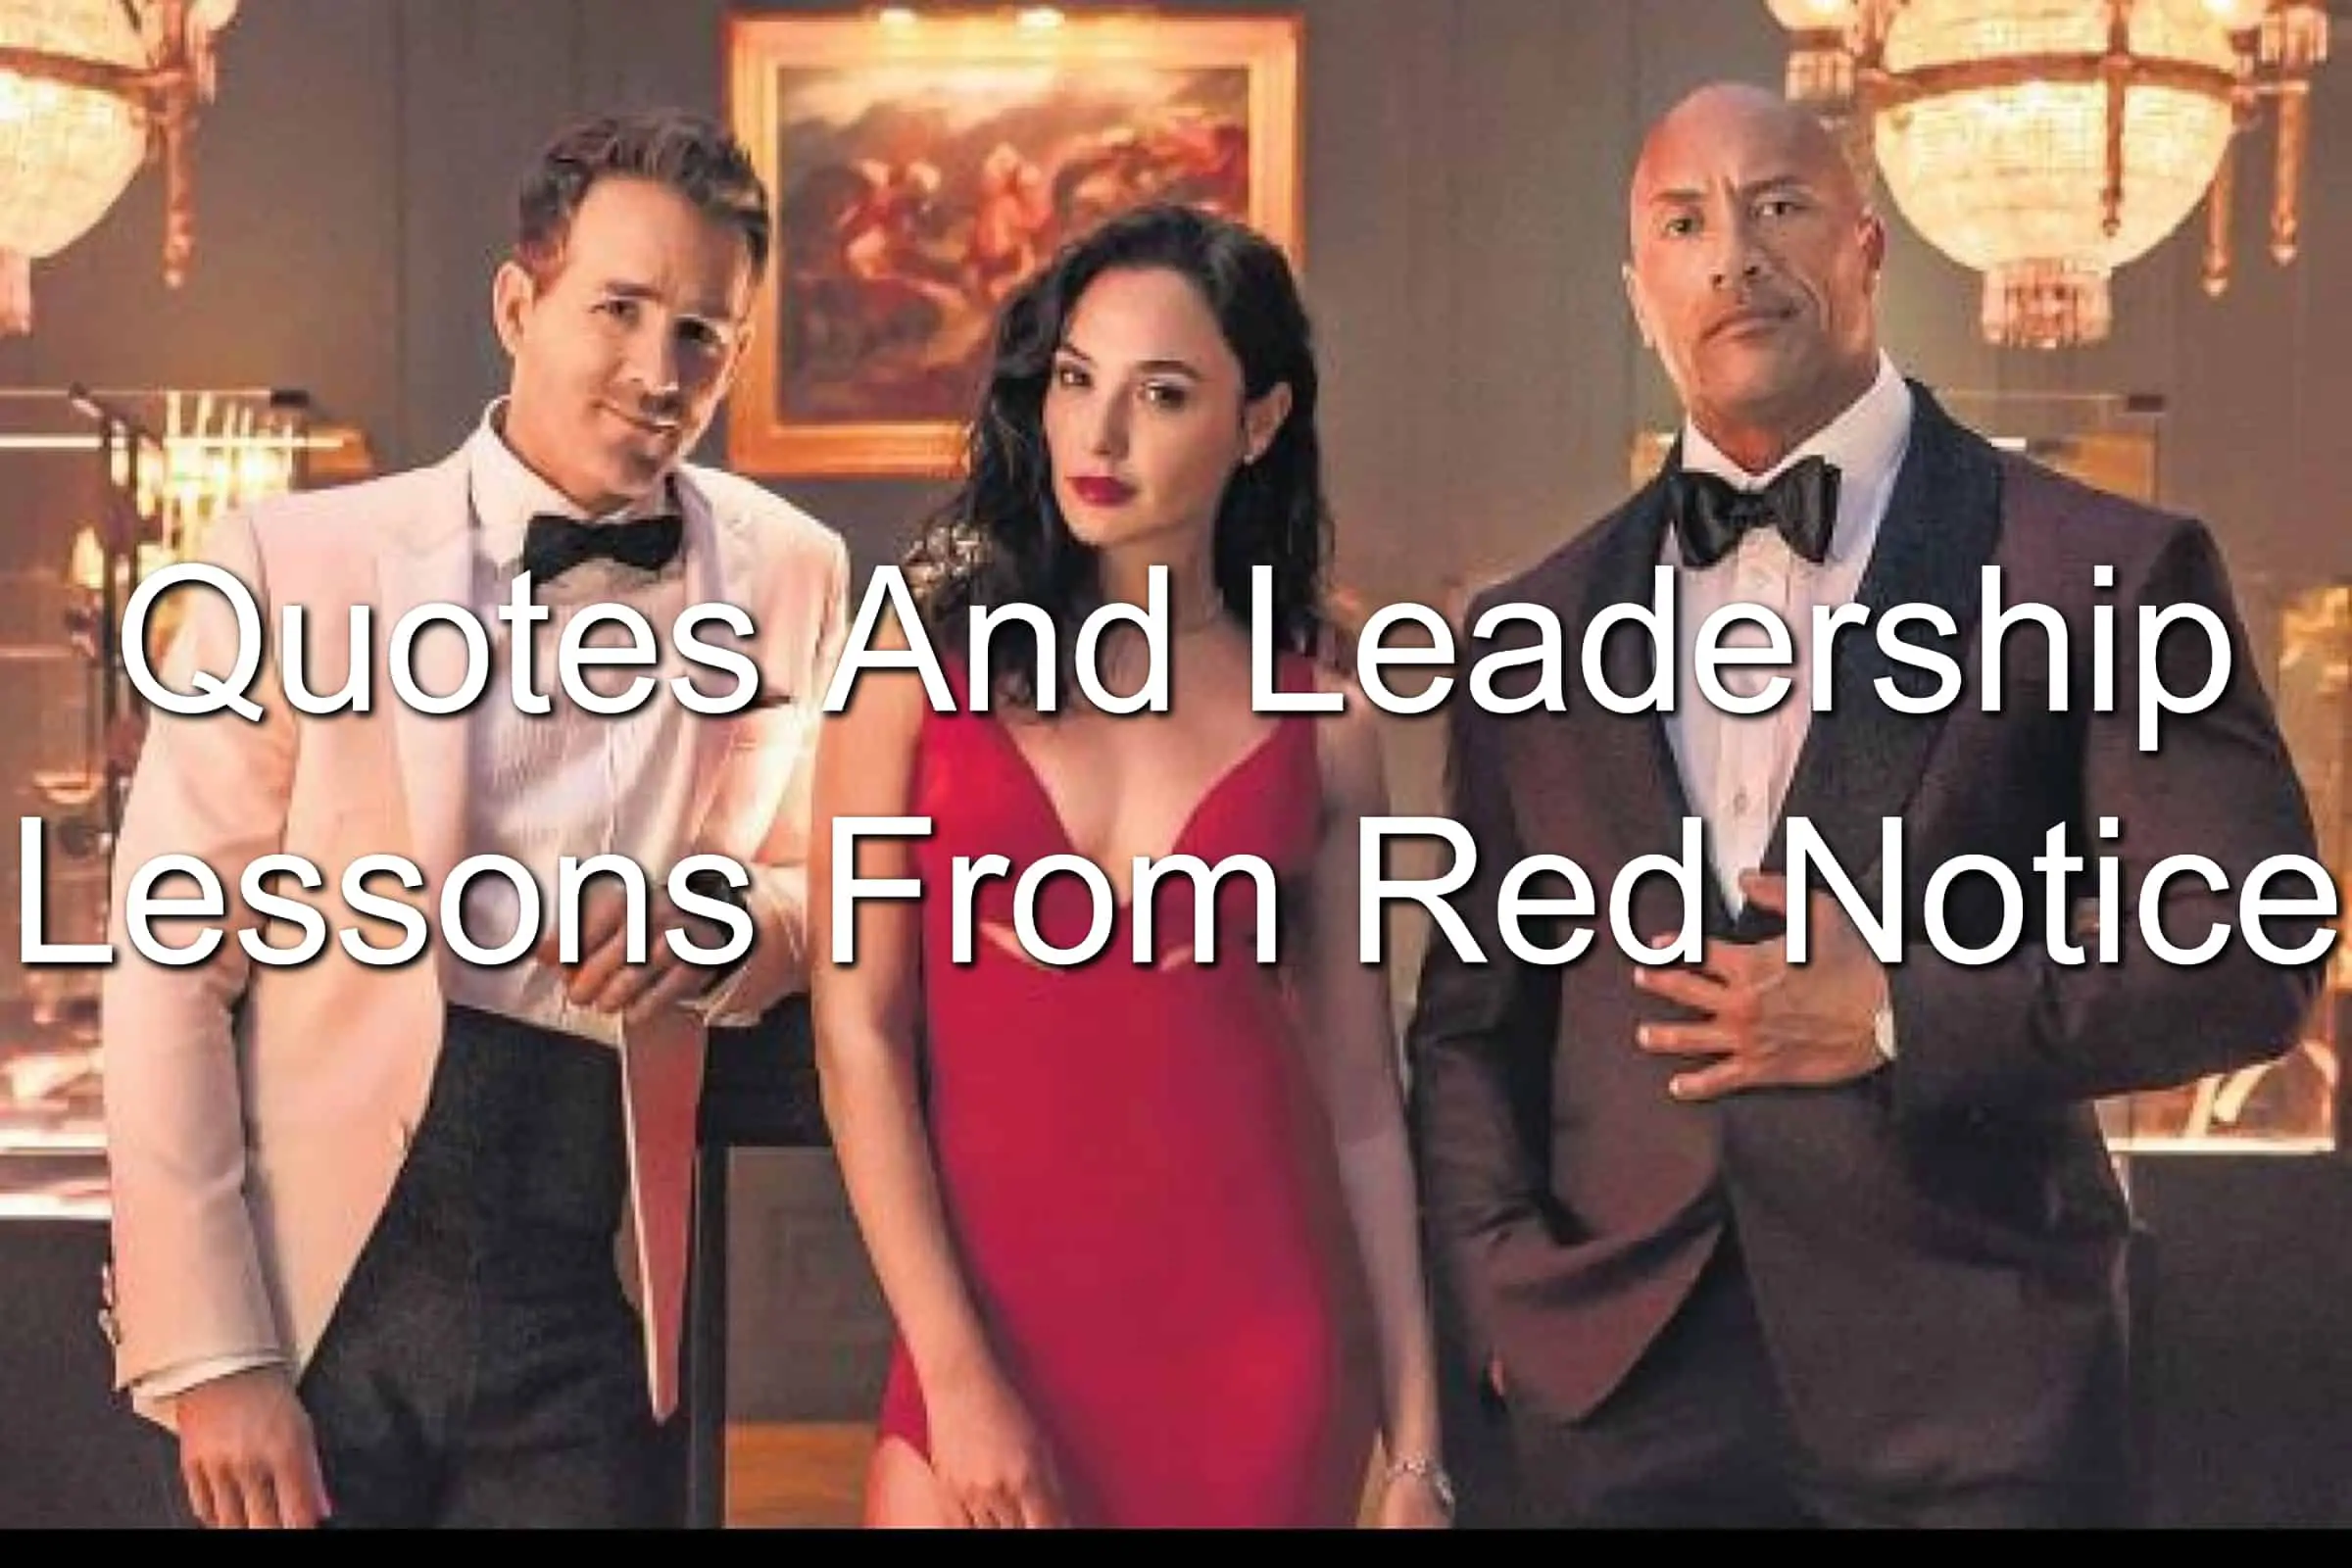 Dwayne Johnson, Gal Gadot, and Ryan Reynolds in Red Notice